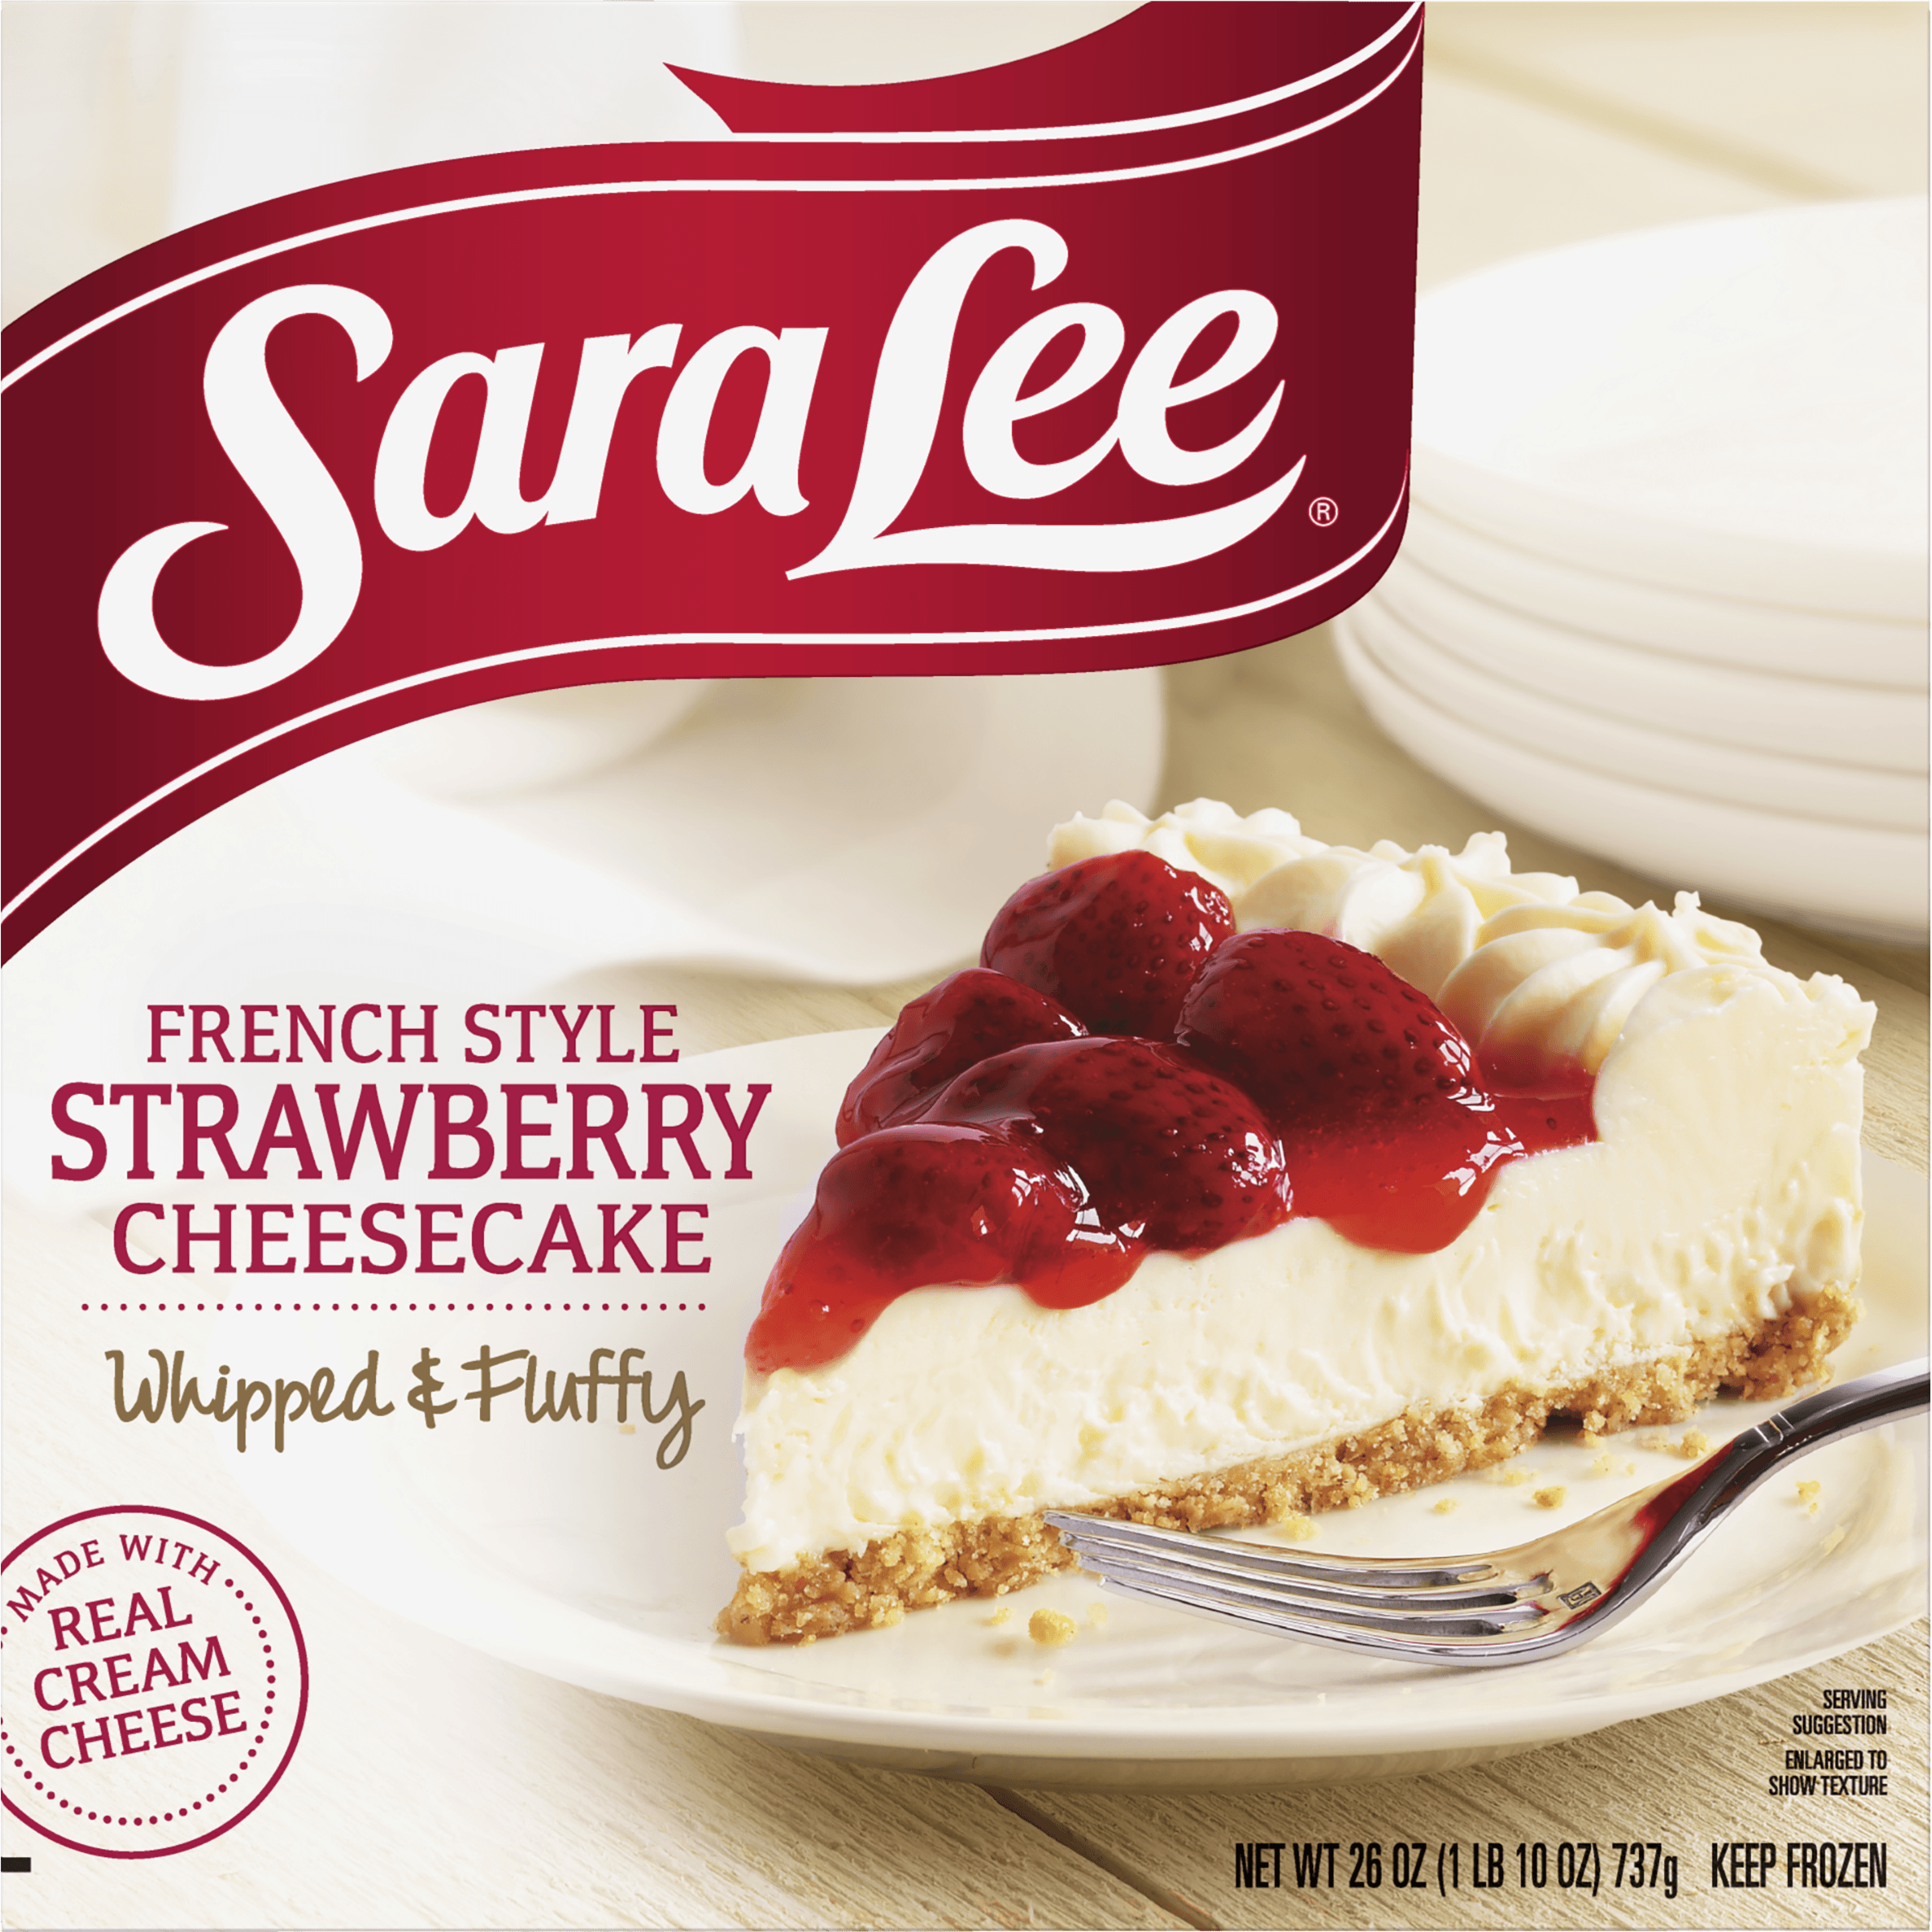 Sara Lee French Style Strawberry Cheesecake, Frozen Dessert, 26 oz Box - image 1 of 5